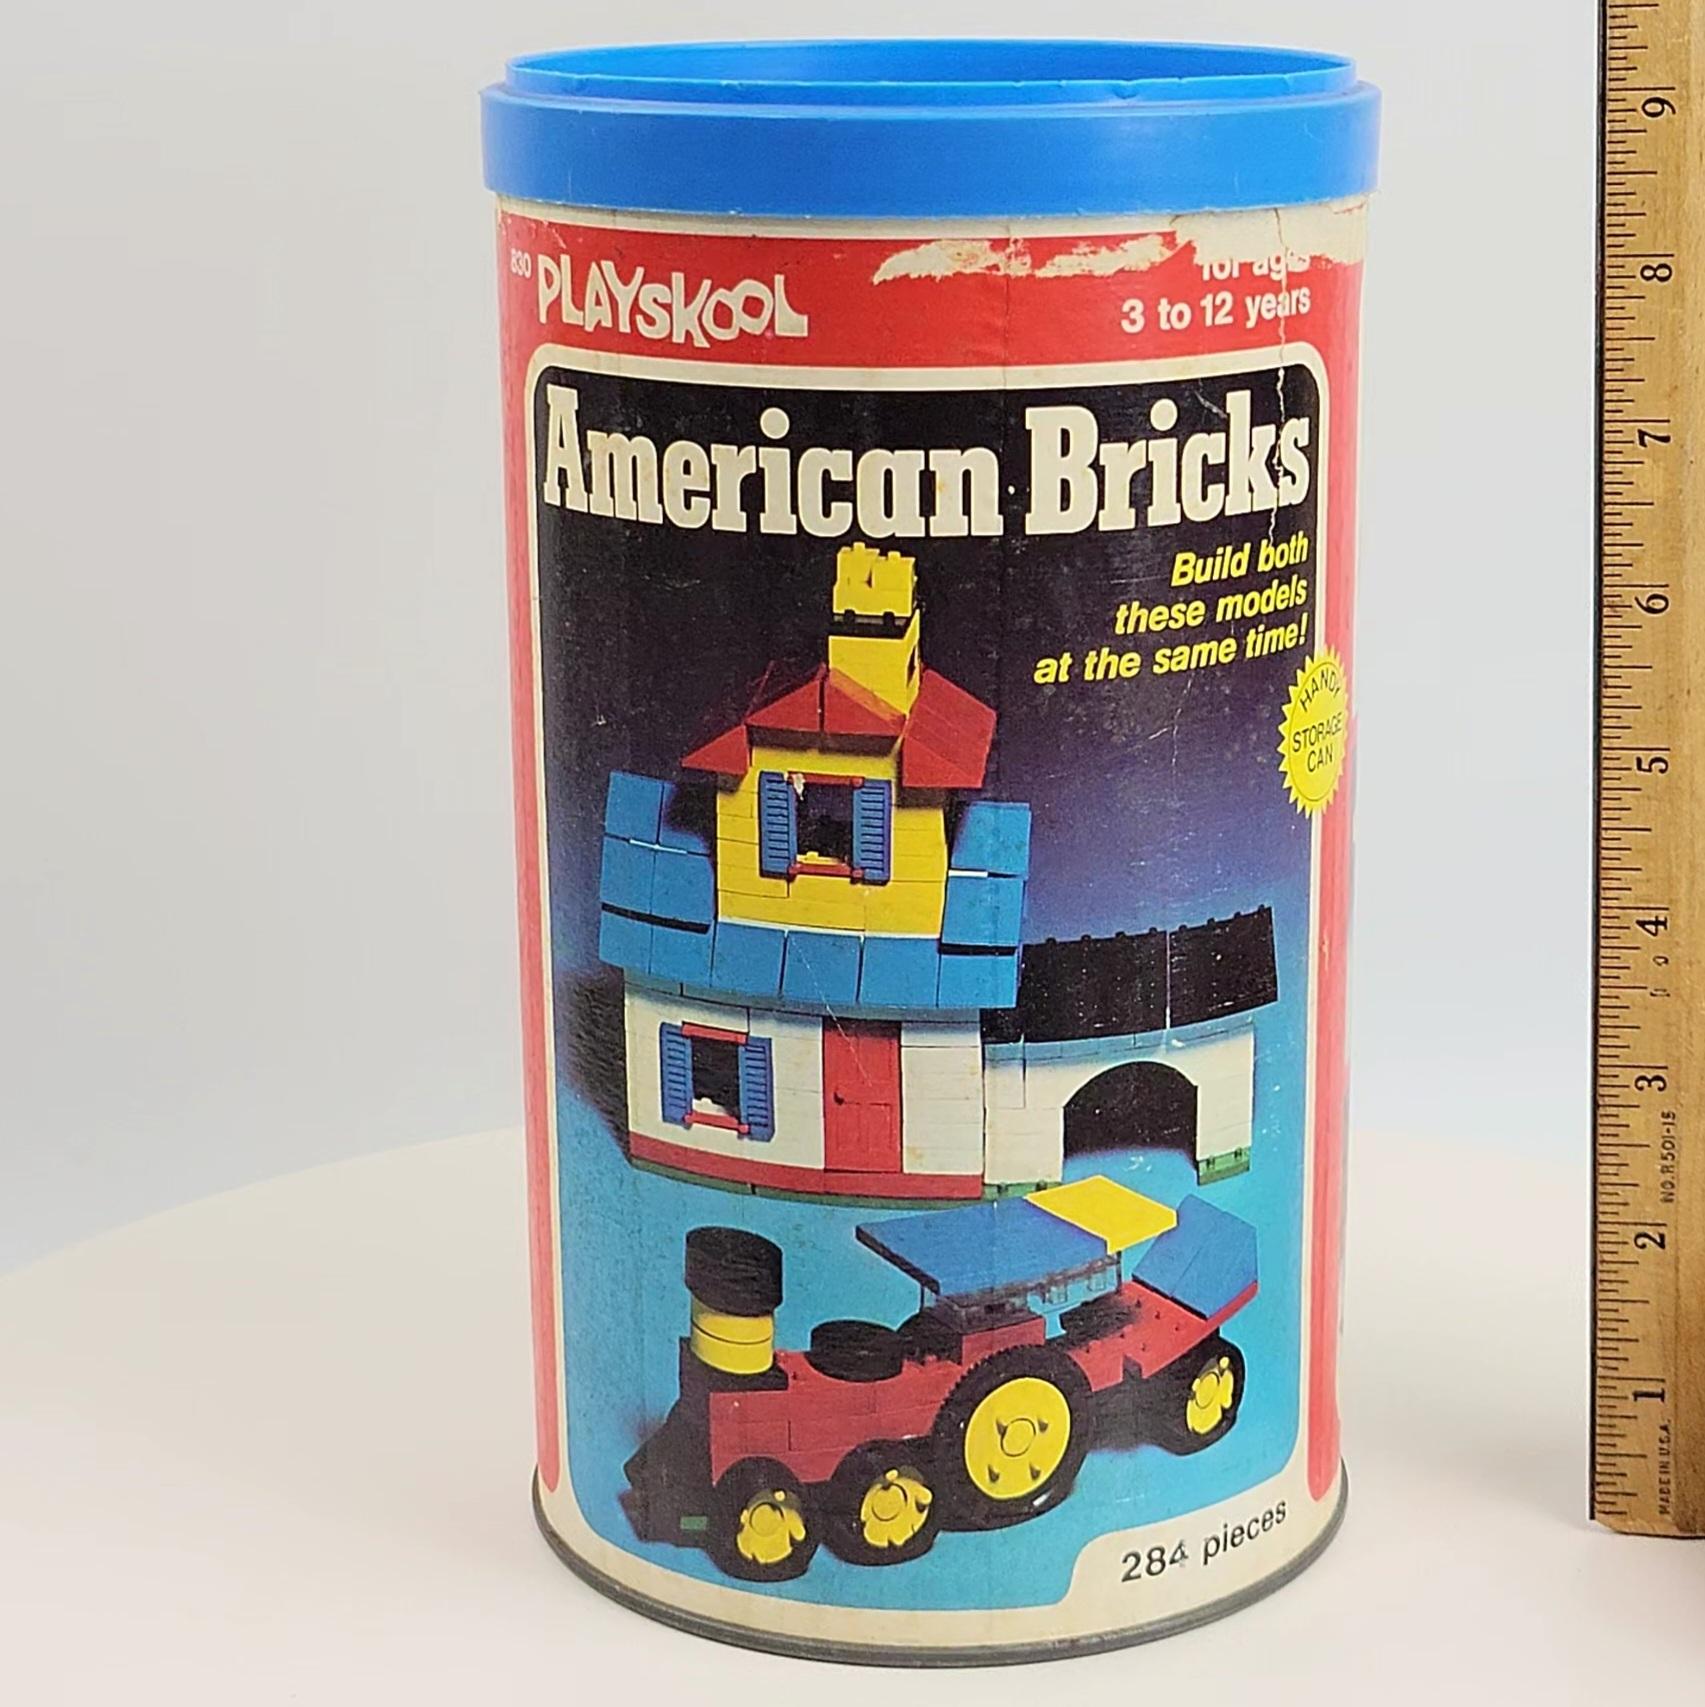 Playskool American Bricks Building Block Set in Original Cannister